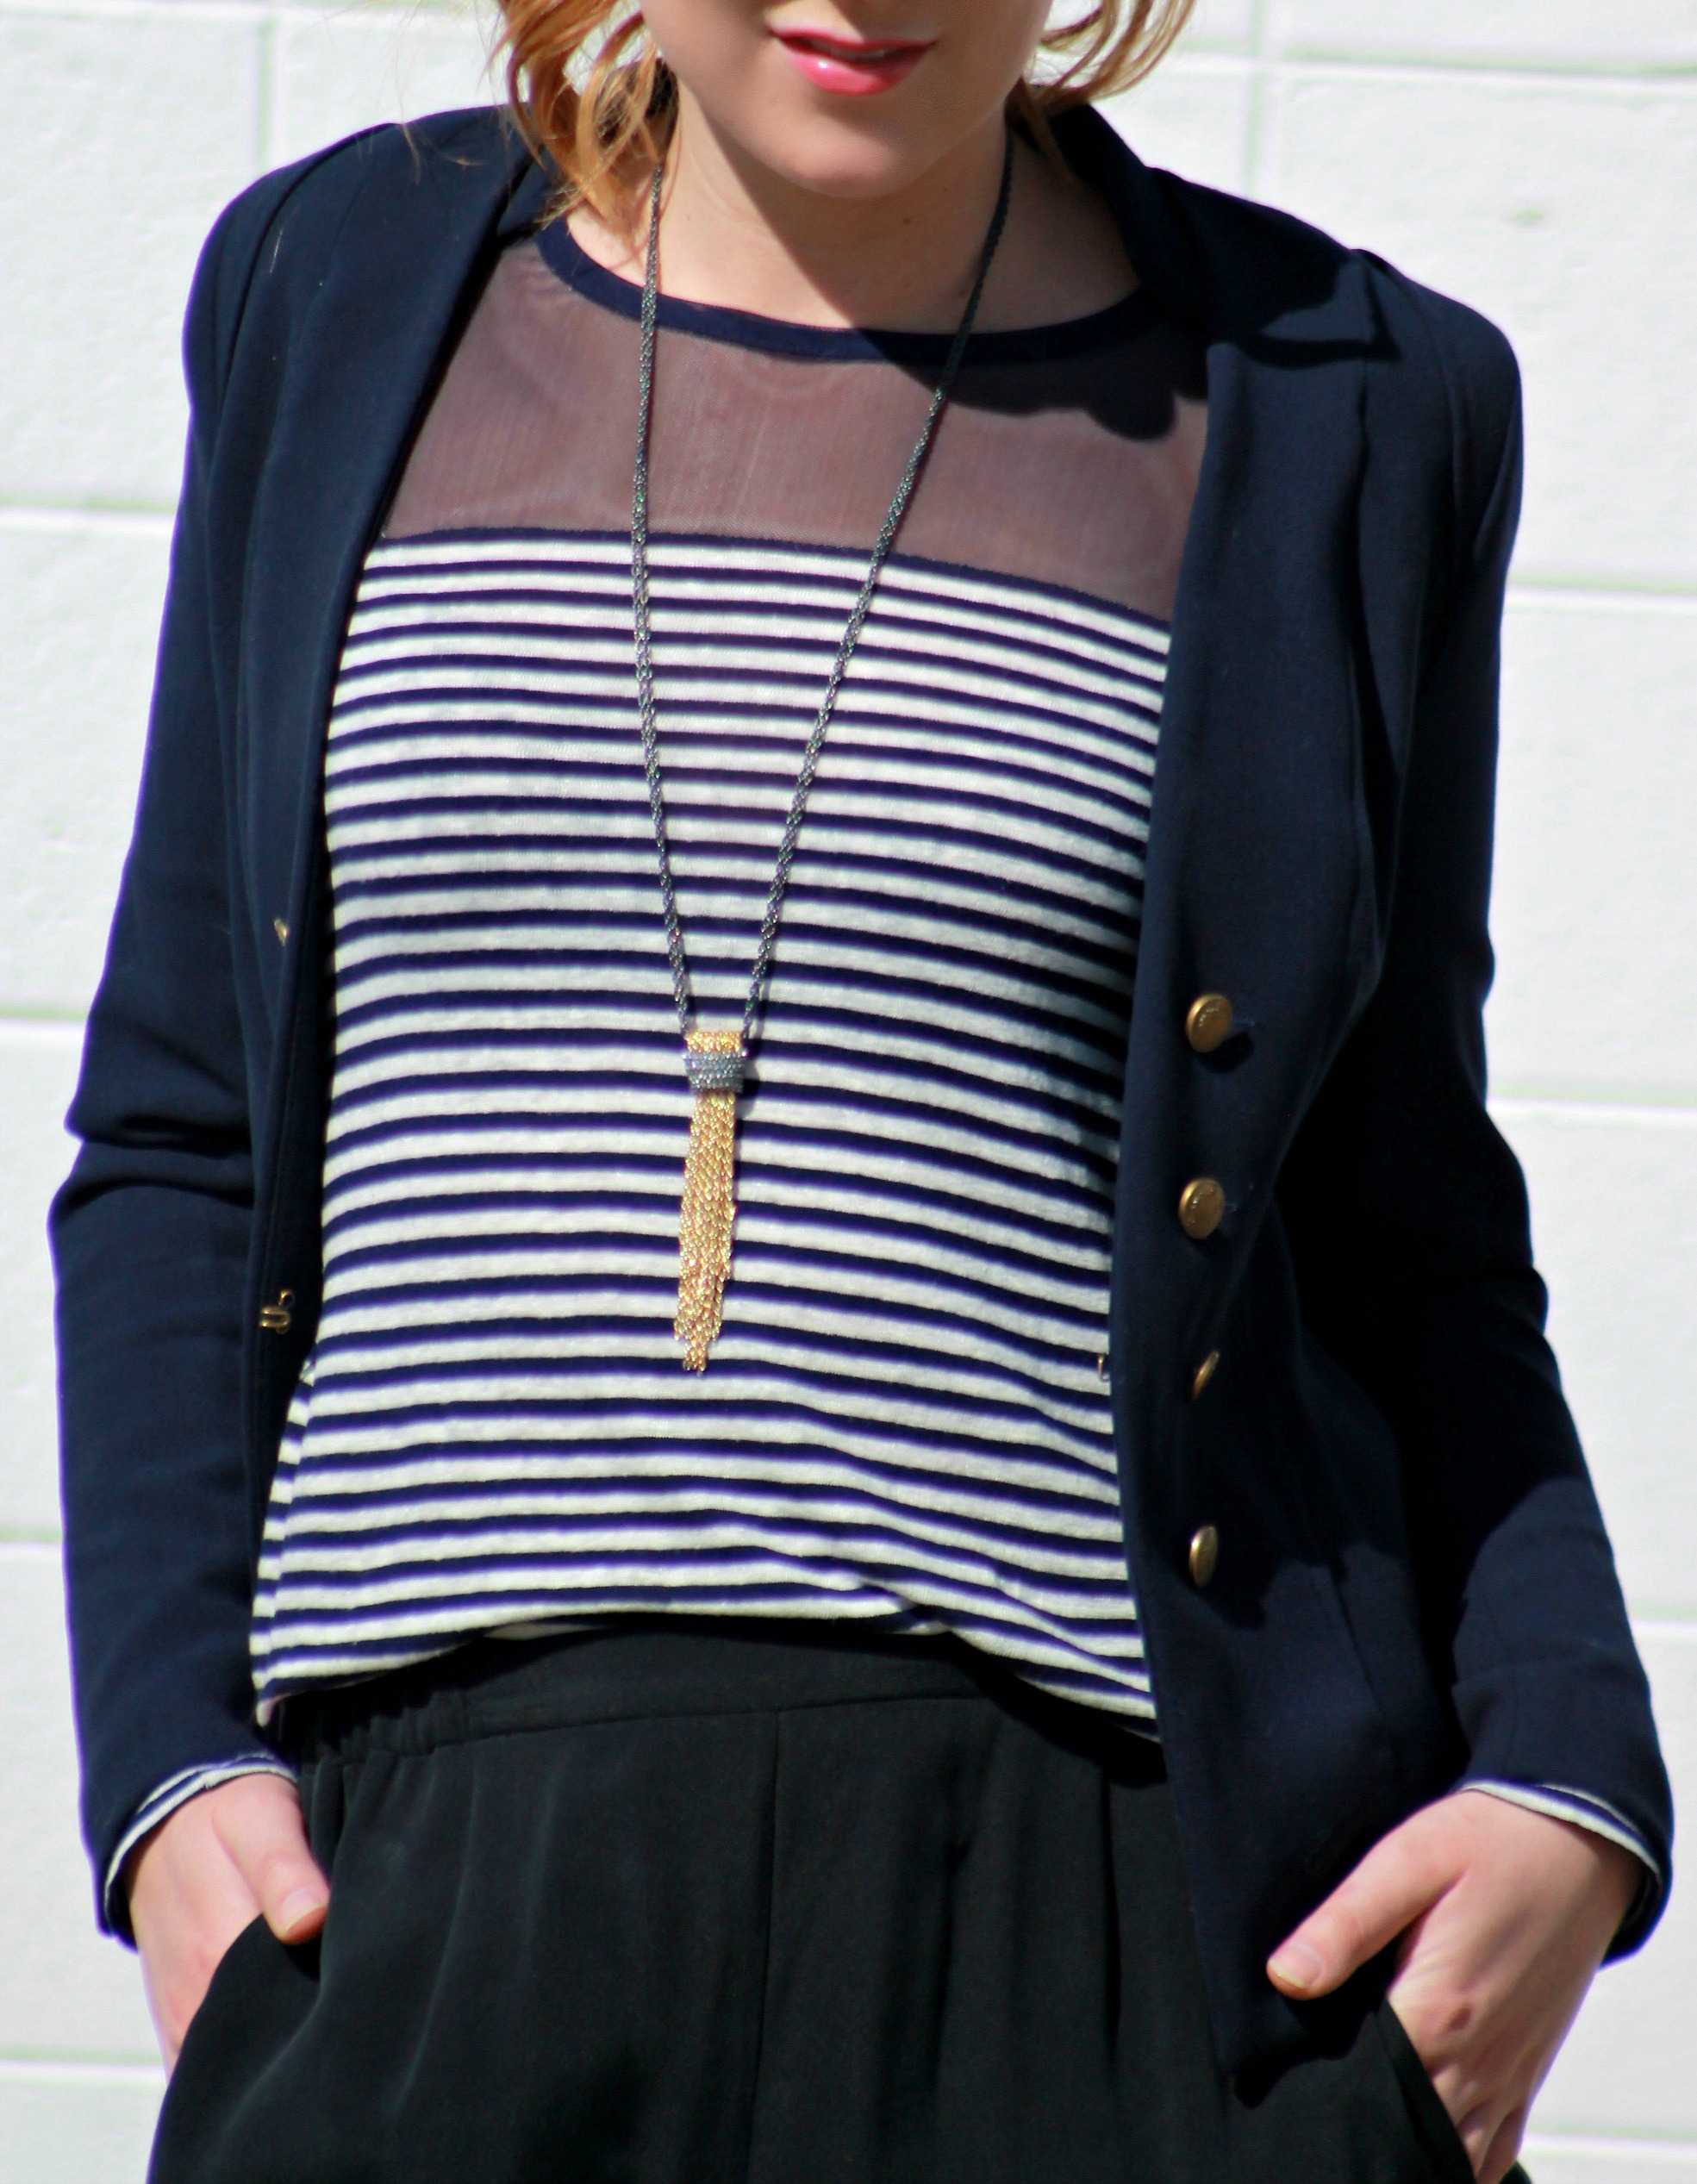 Navy Striped Mesh Shirt + Navy Blazer + Tassel Necklace